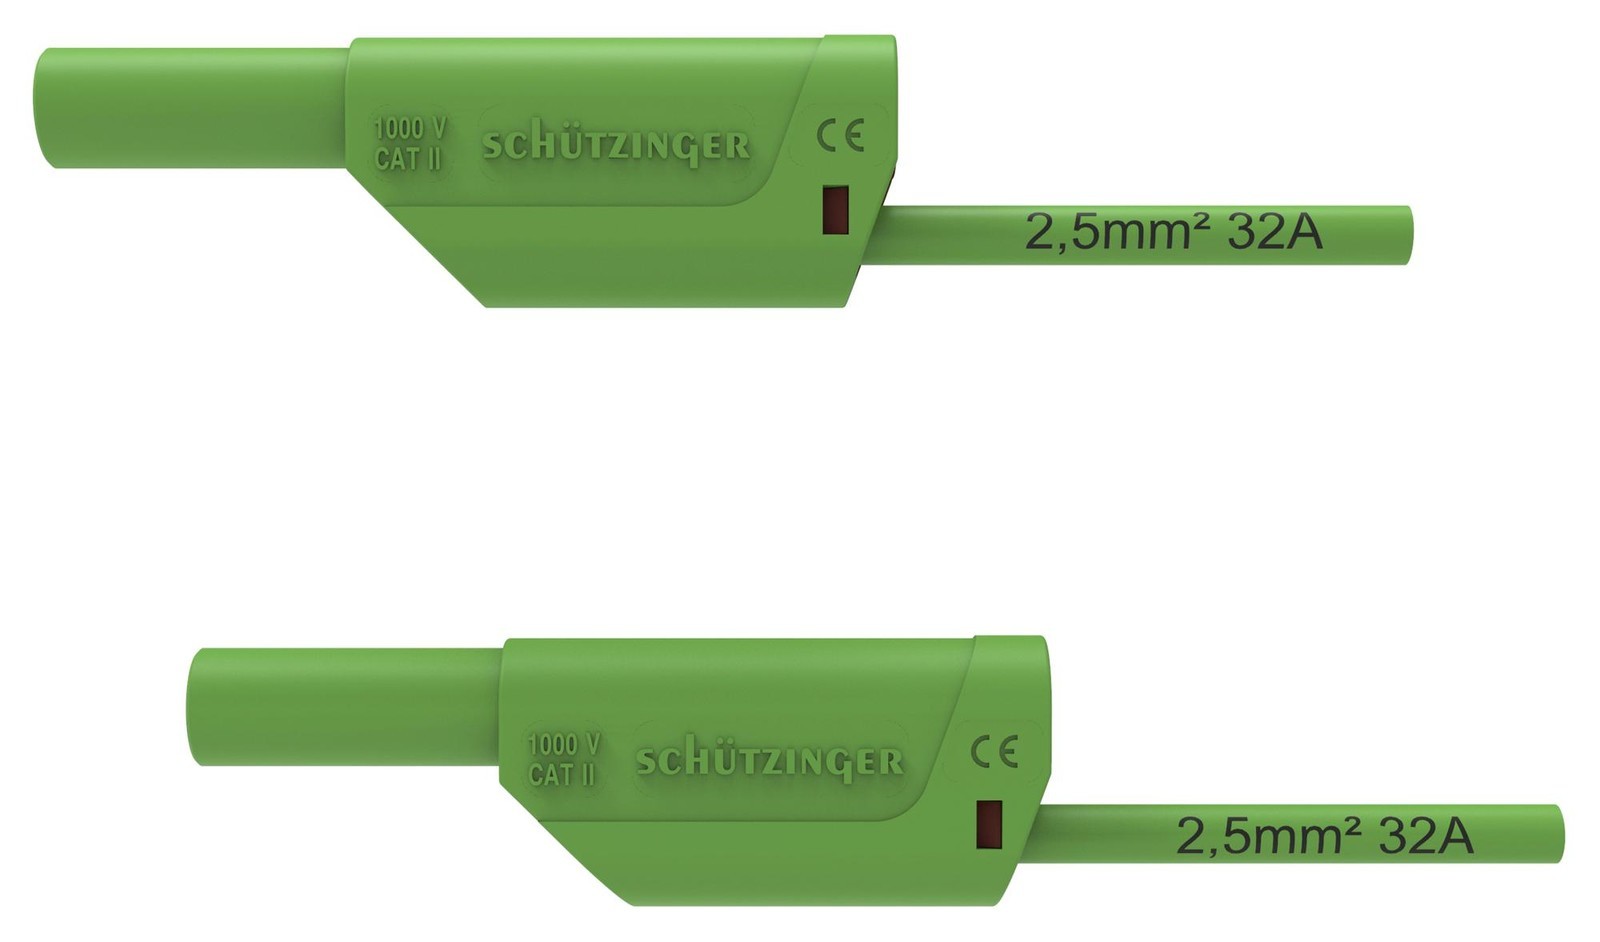 Schutzinger Di Vsfk 8500 / 2.5 / 100 / Gn 4mm Banana Plug-Sq, Shrouded, Green, 1M